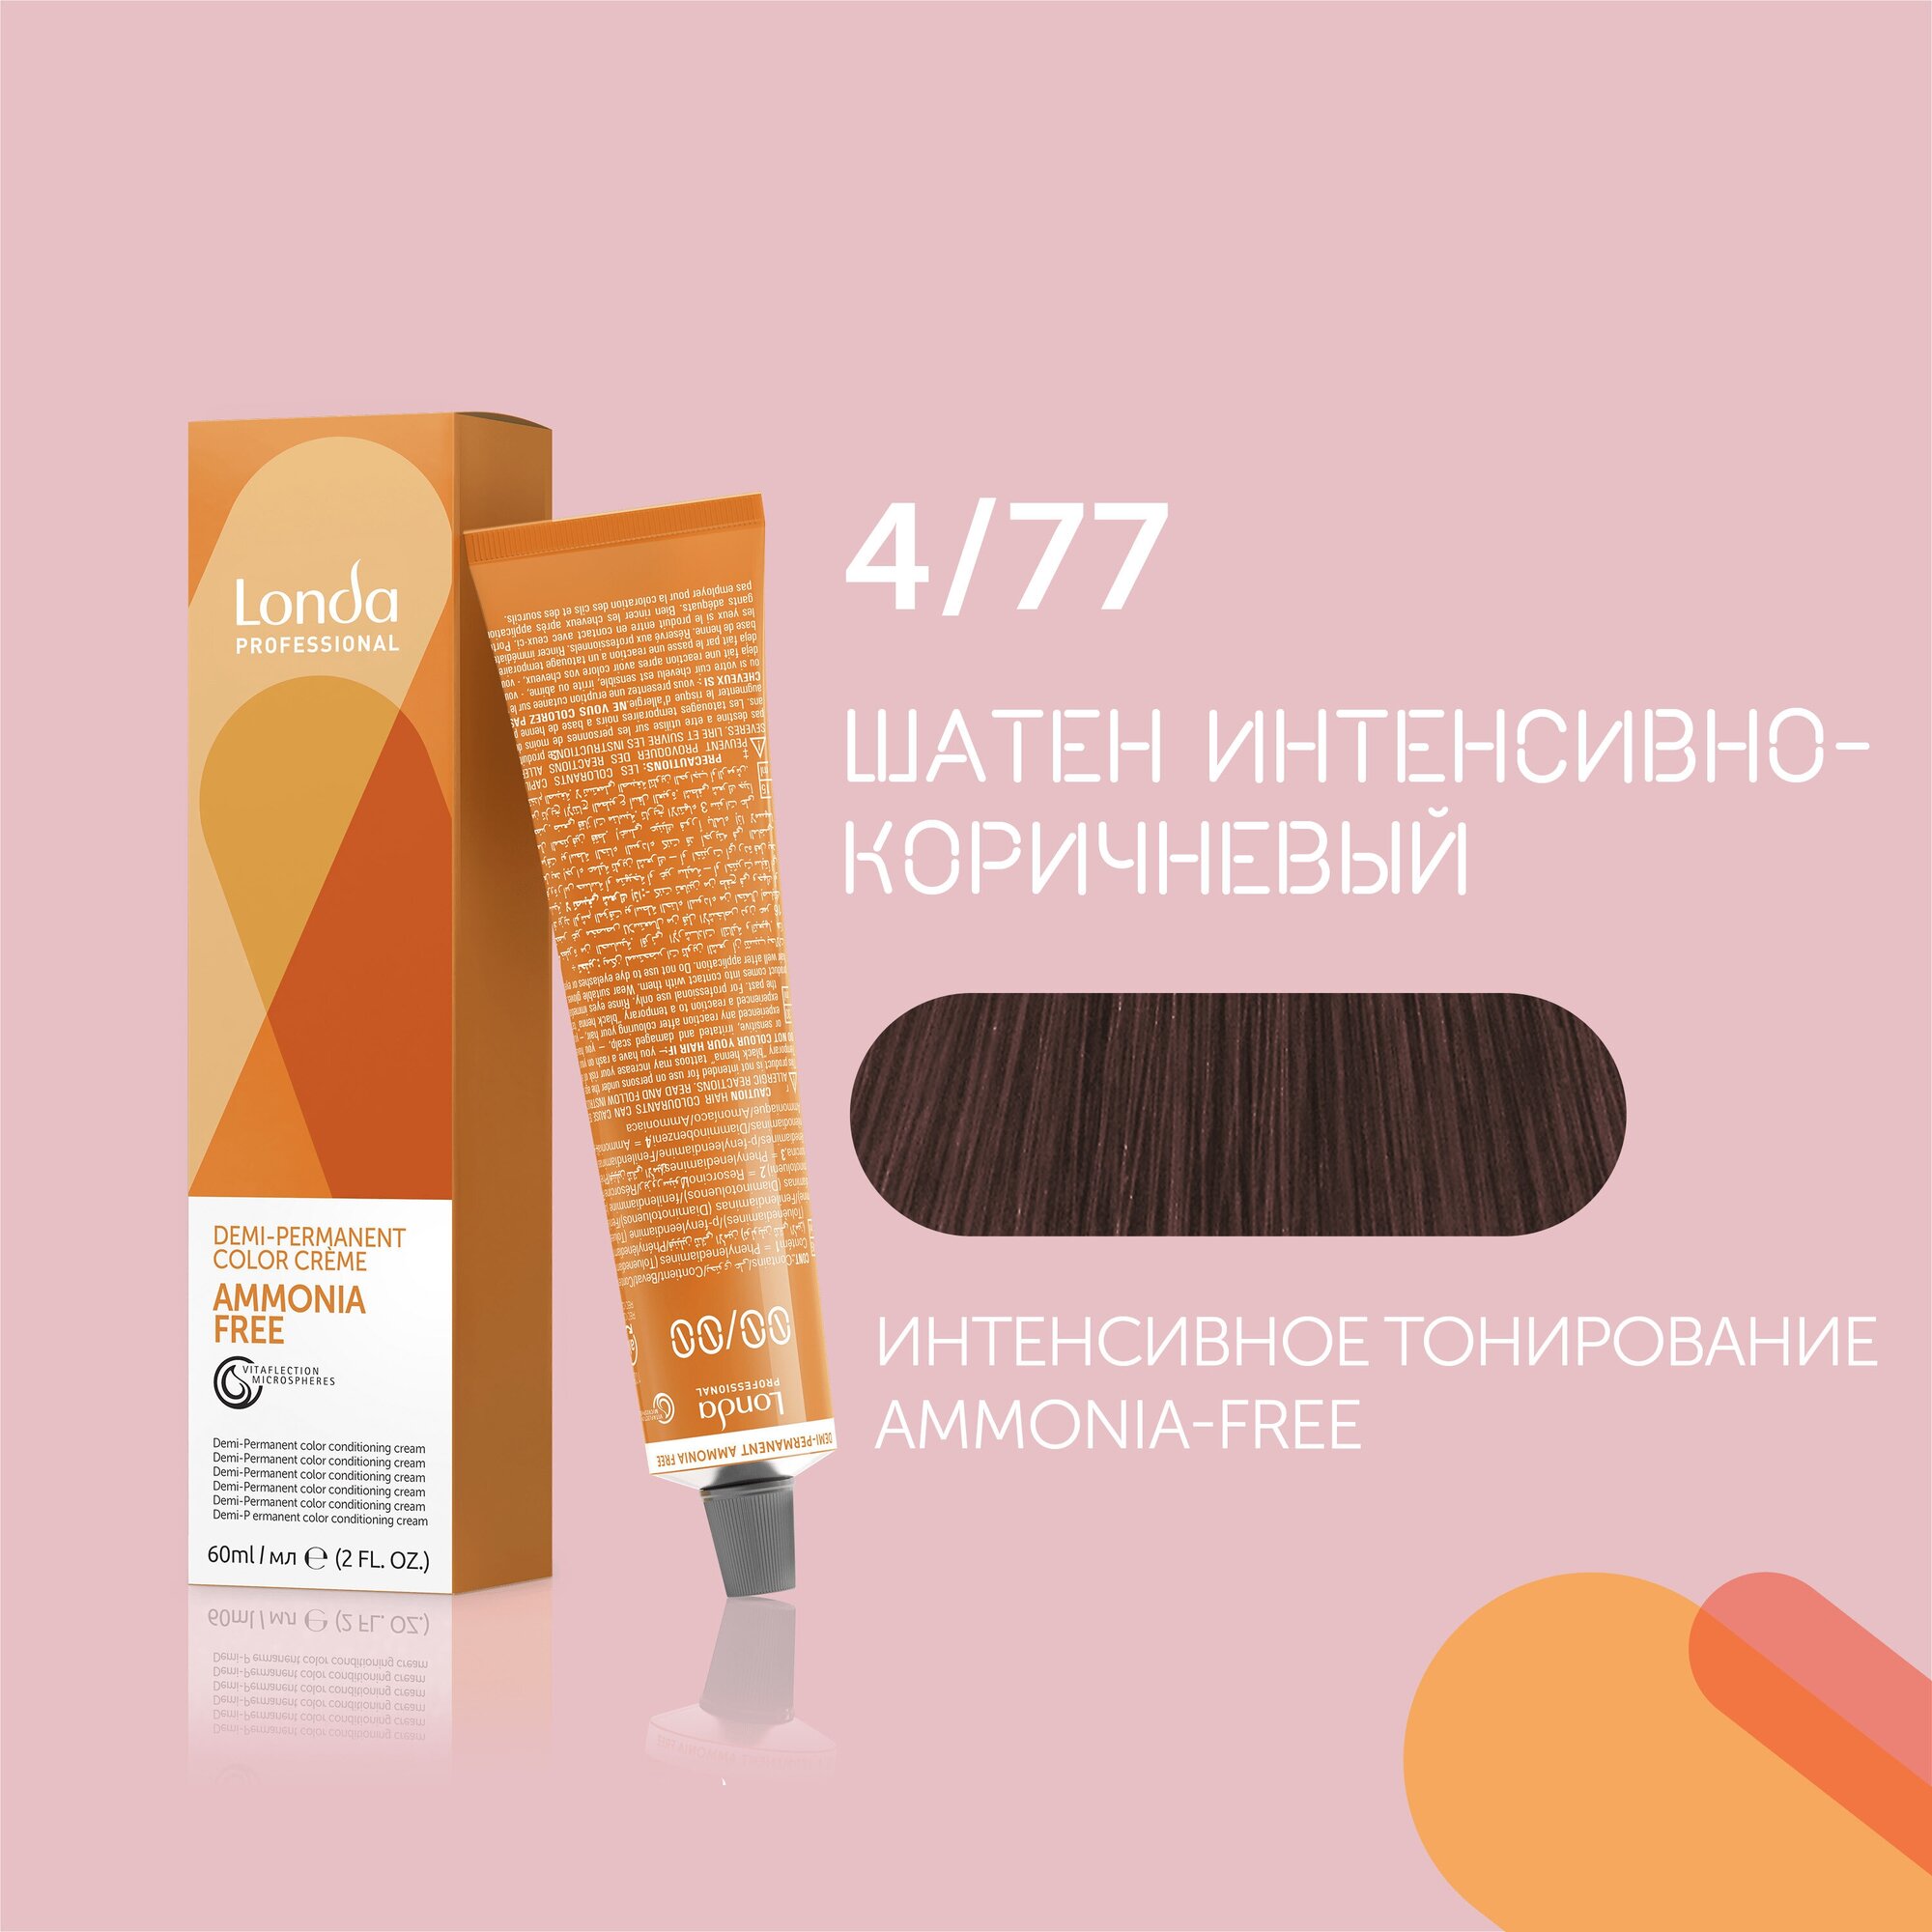 Londa Professional AMMONIA FREE - Лонда Оттеночная крем-краска для волос без аммиака, 60мл - AMMONIA FREE 4/77 шатен интенсивно-коричневый